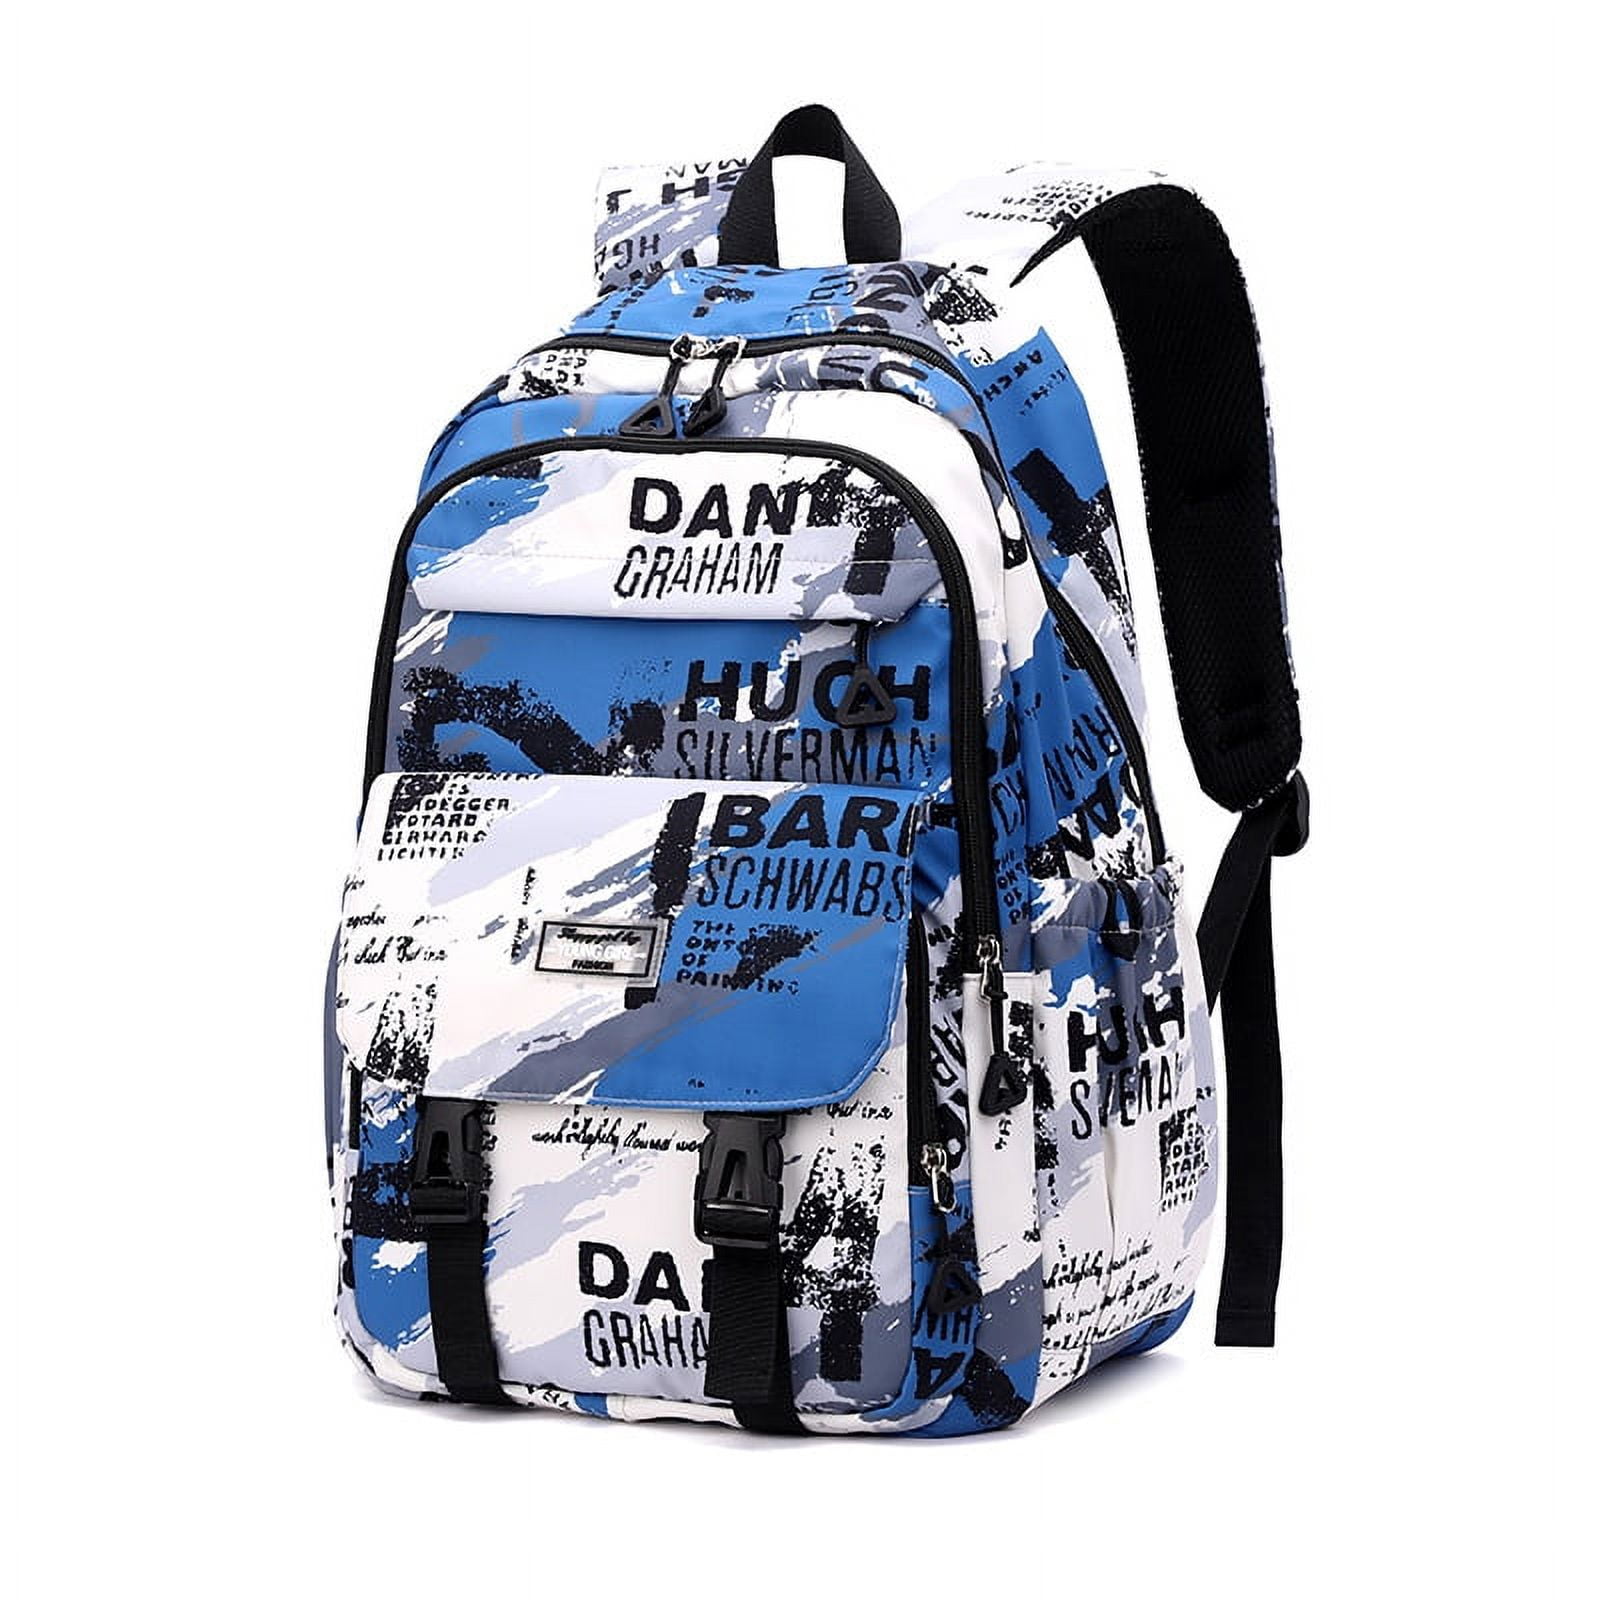 18″NBA Backpack School Bag